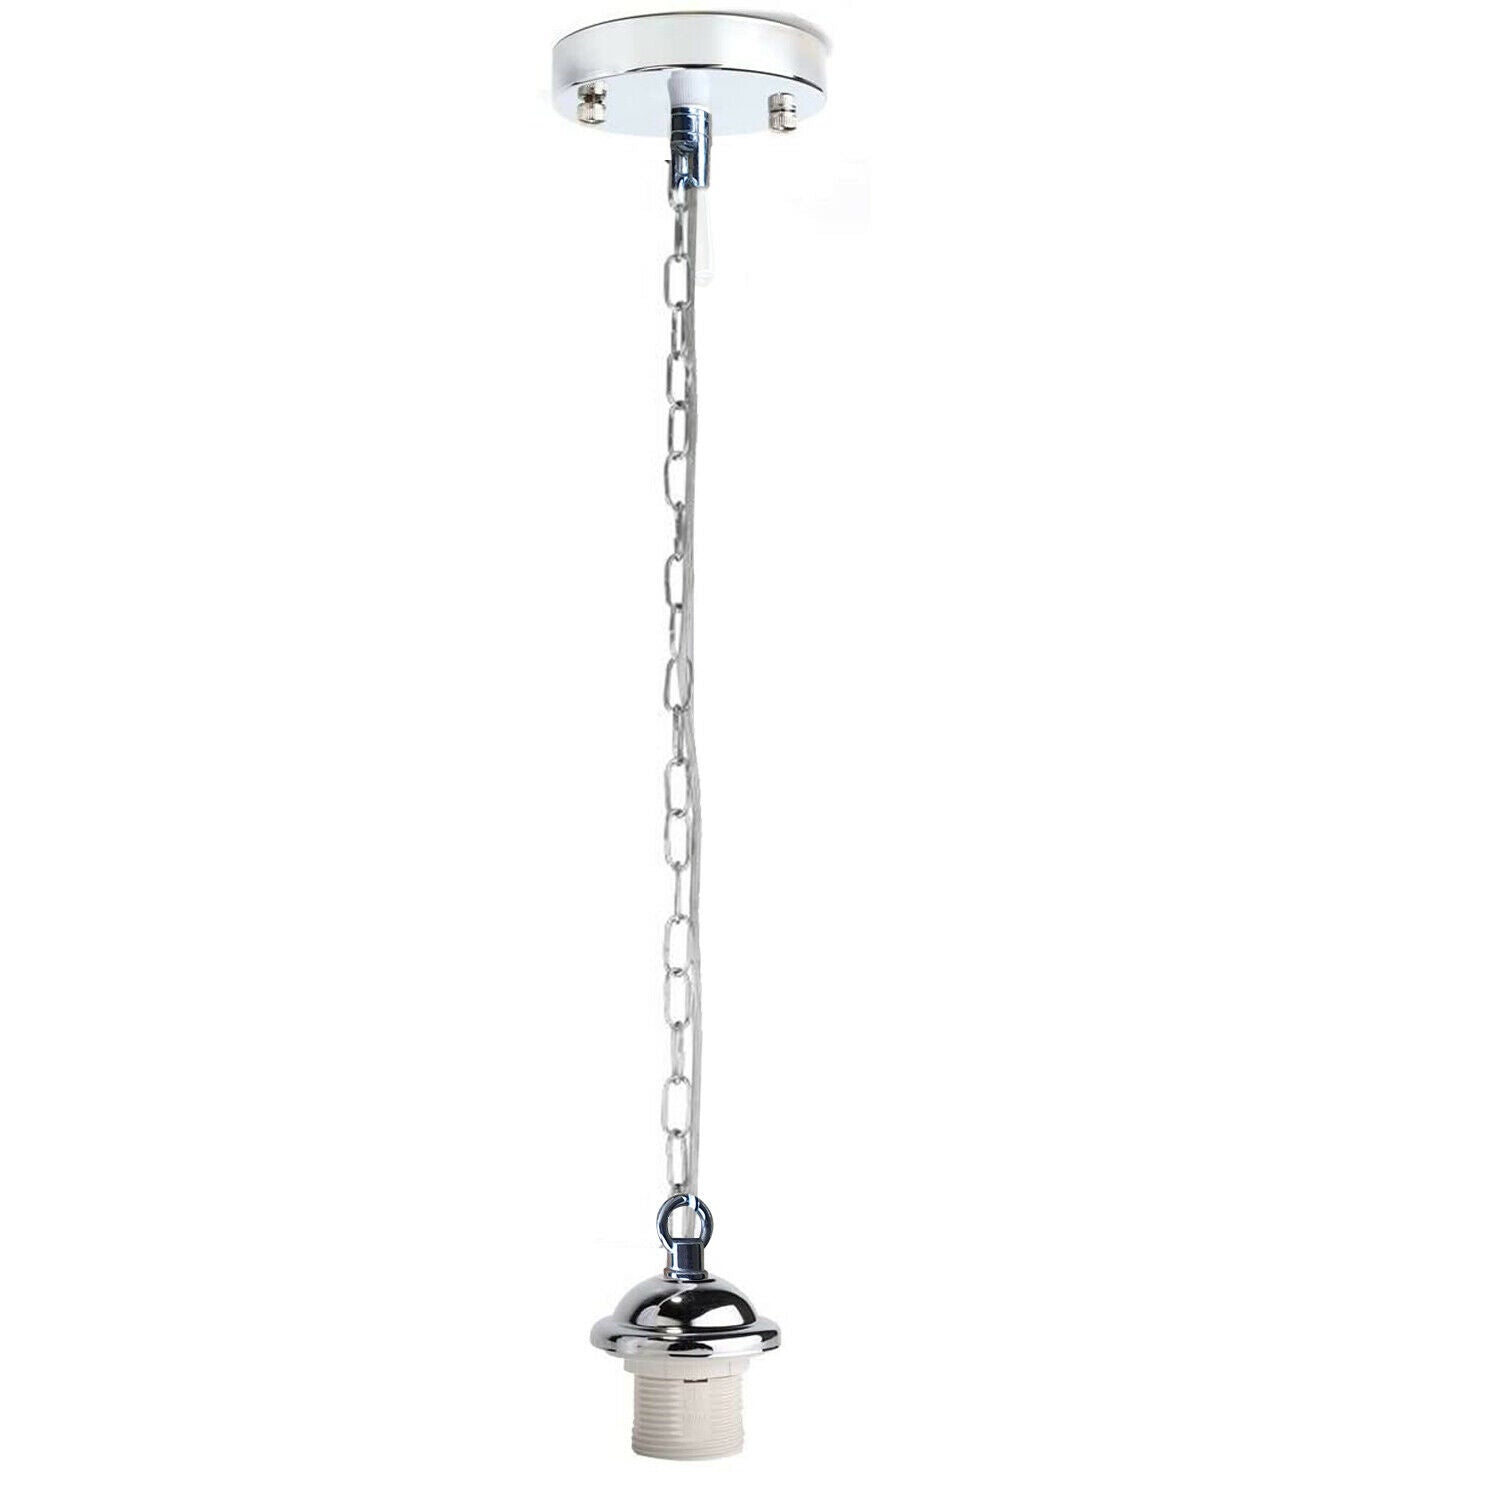 Chrome Metal Ceiing E27 Lamp Holder Pendant Light With Chain~1775 - electricalsone UK Ltd